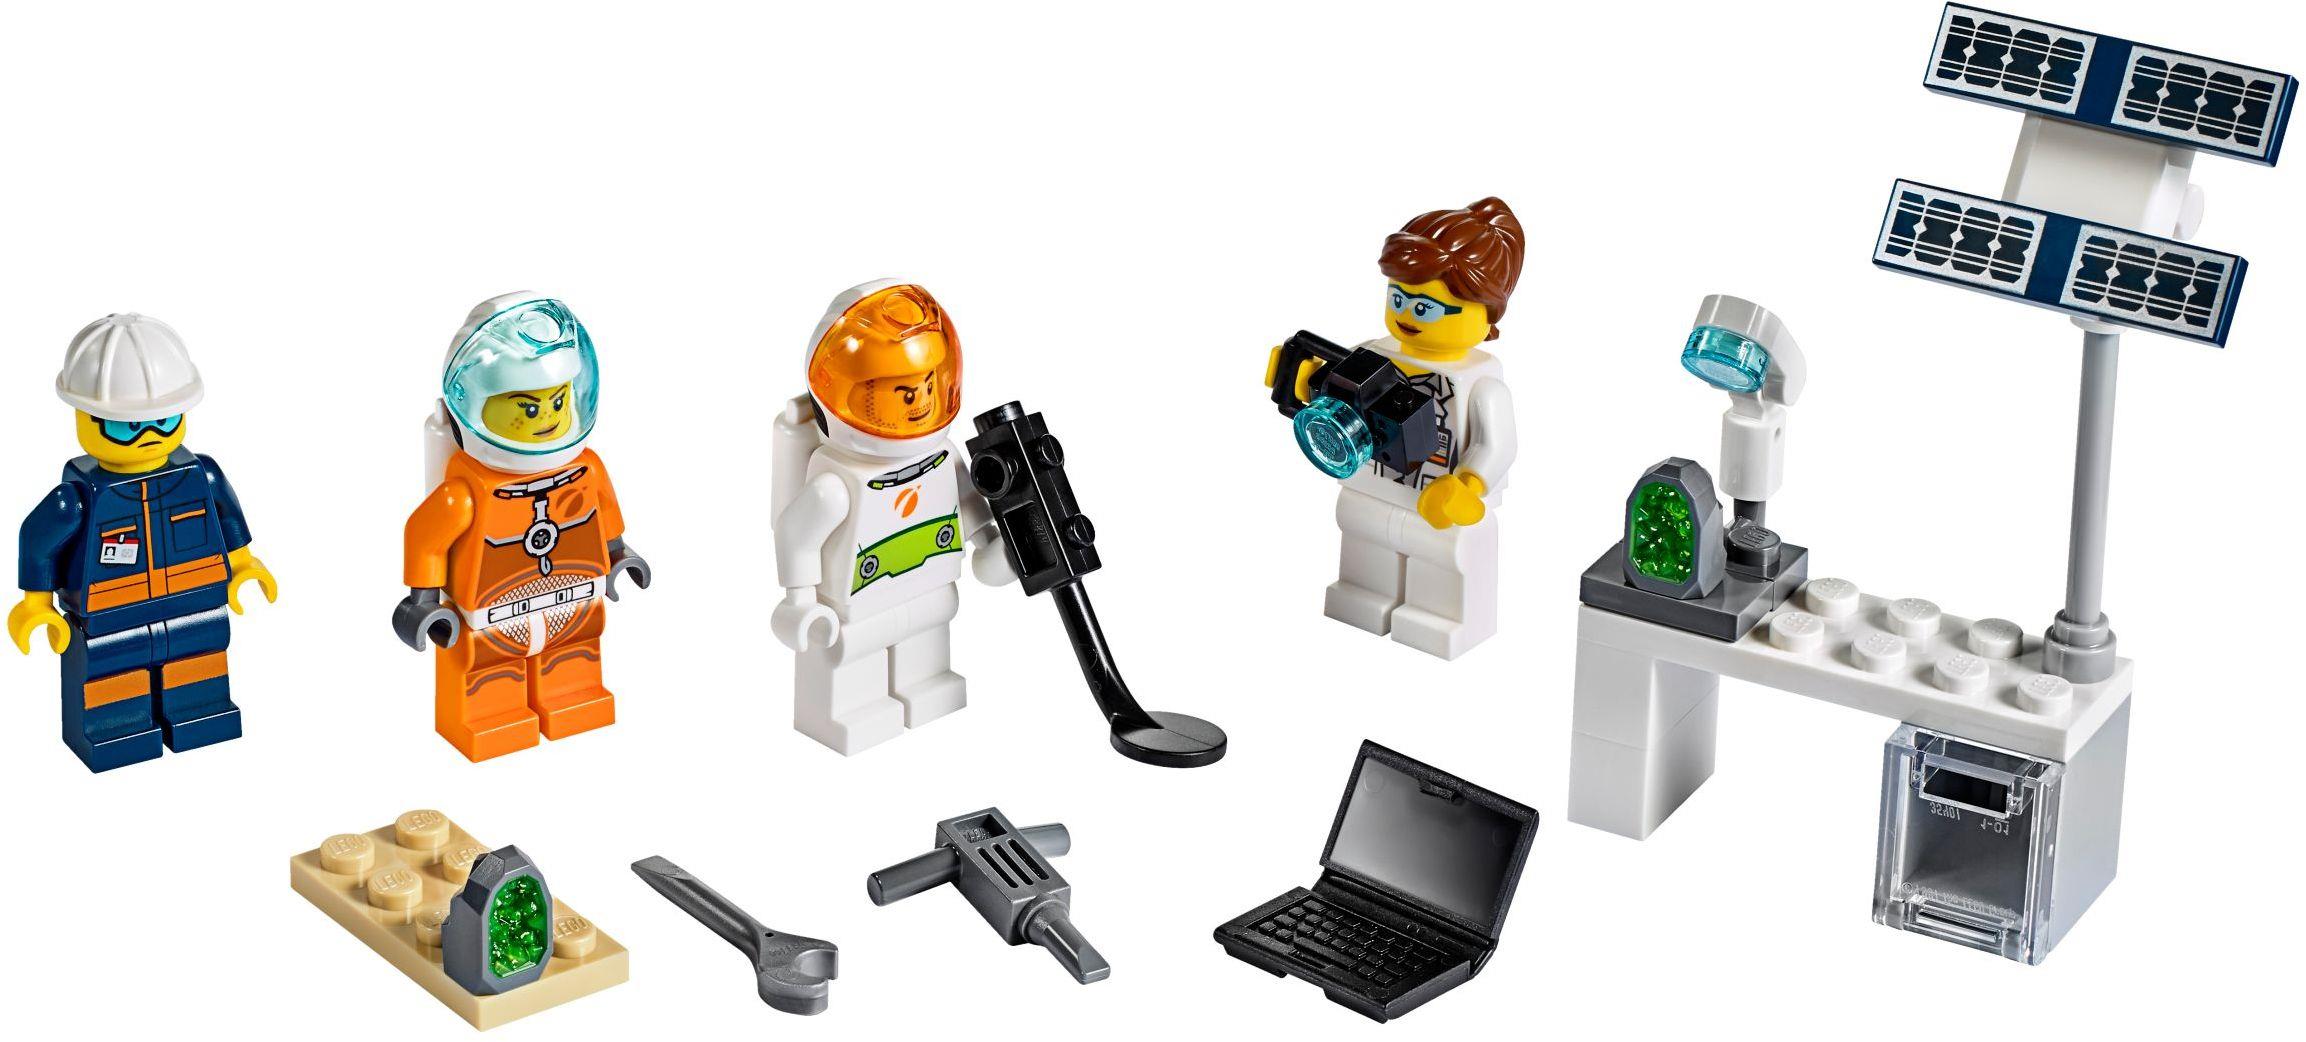 Lego 40345 City Space Minifigure Set ~ Mars Exploration ~ Exclusive Minifigure